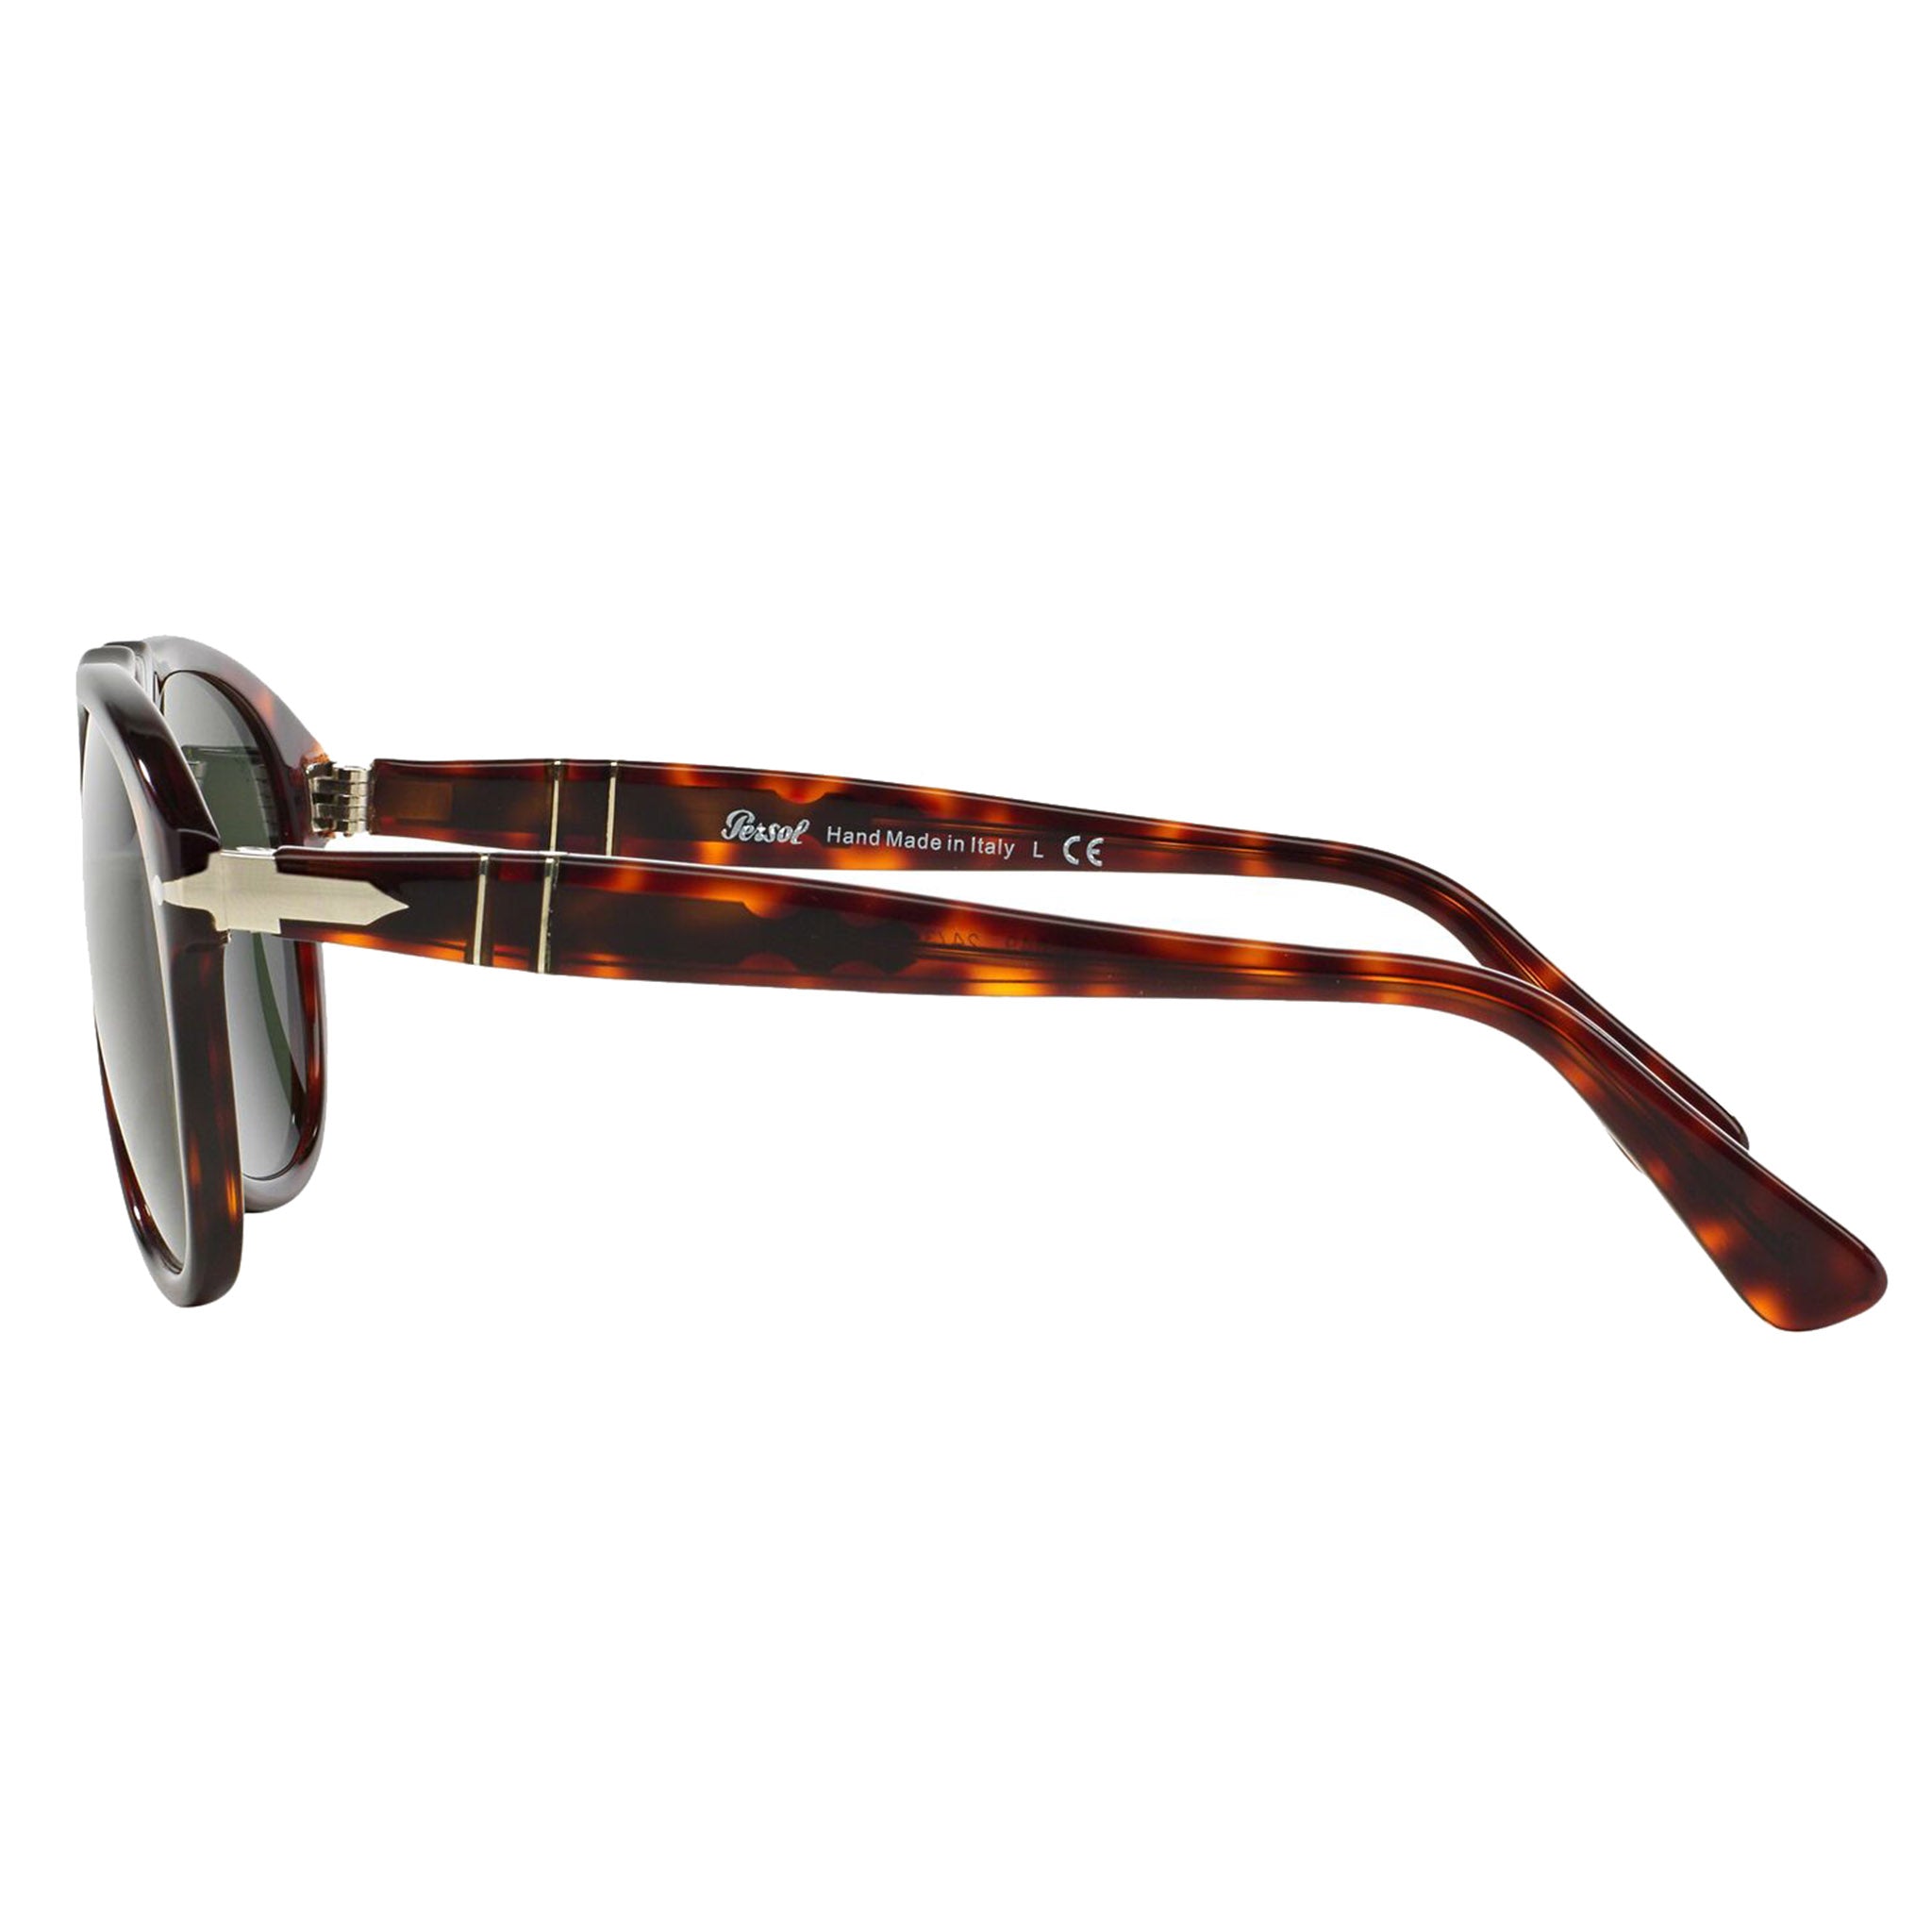 Persol 649 Havana Polarized Green Sunglasses